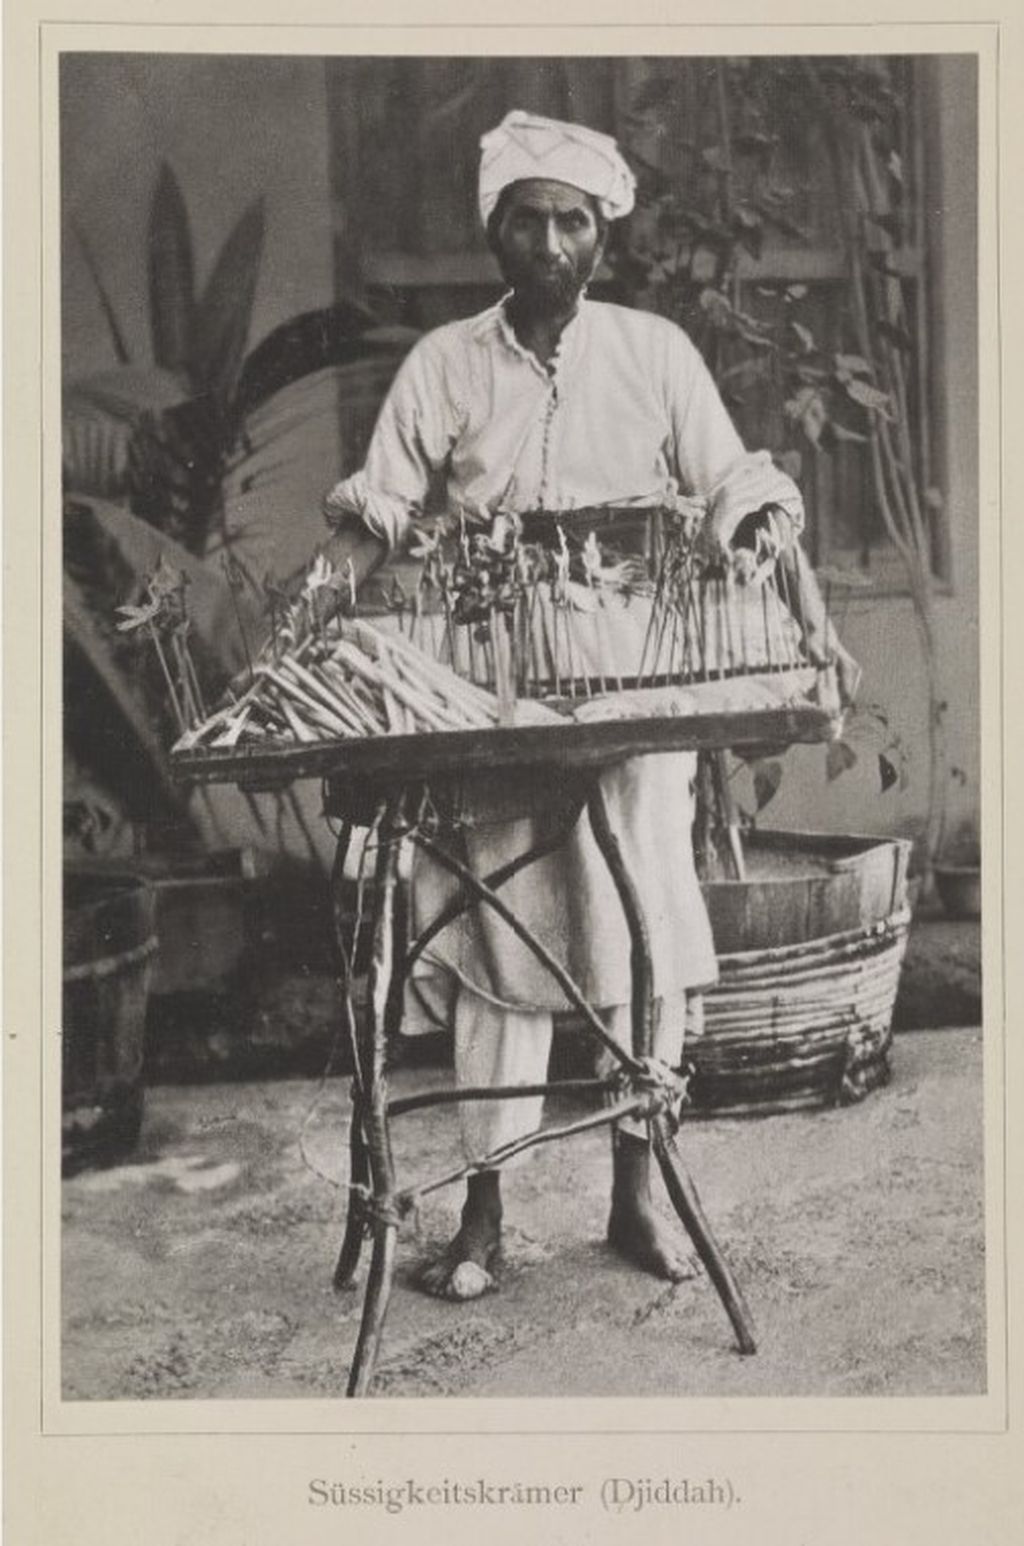 Seorang pria penjual gula-gula dan siwak di Jeddah pada akhir abad ke-19 karya Snouck Hurgronje (sumber: Bilder-Atlas zu Mekka, 1888).